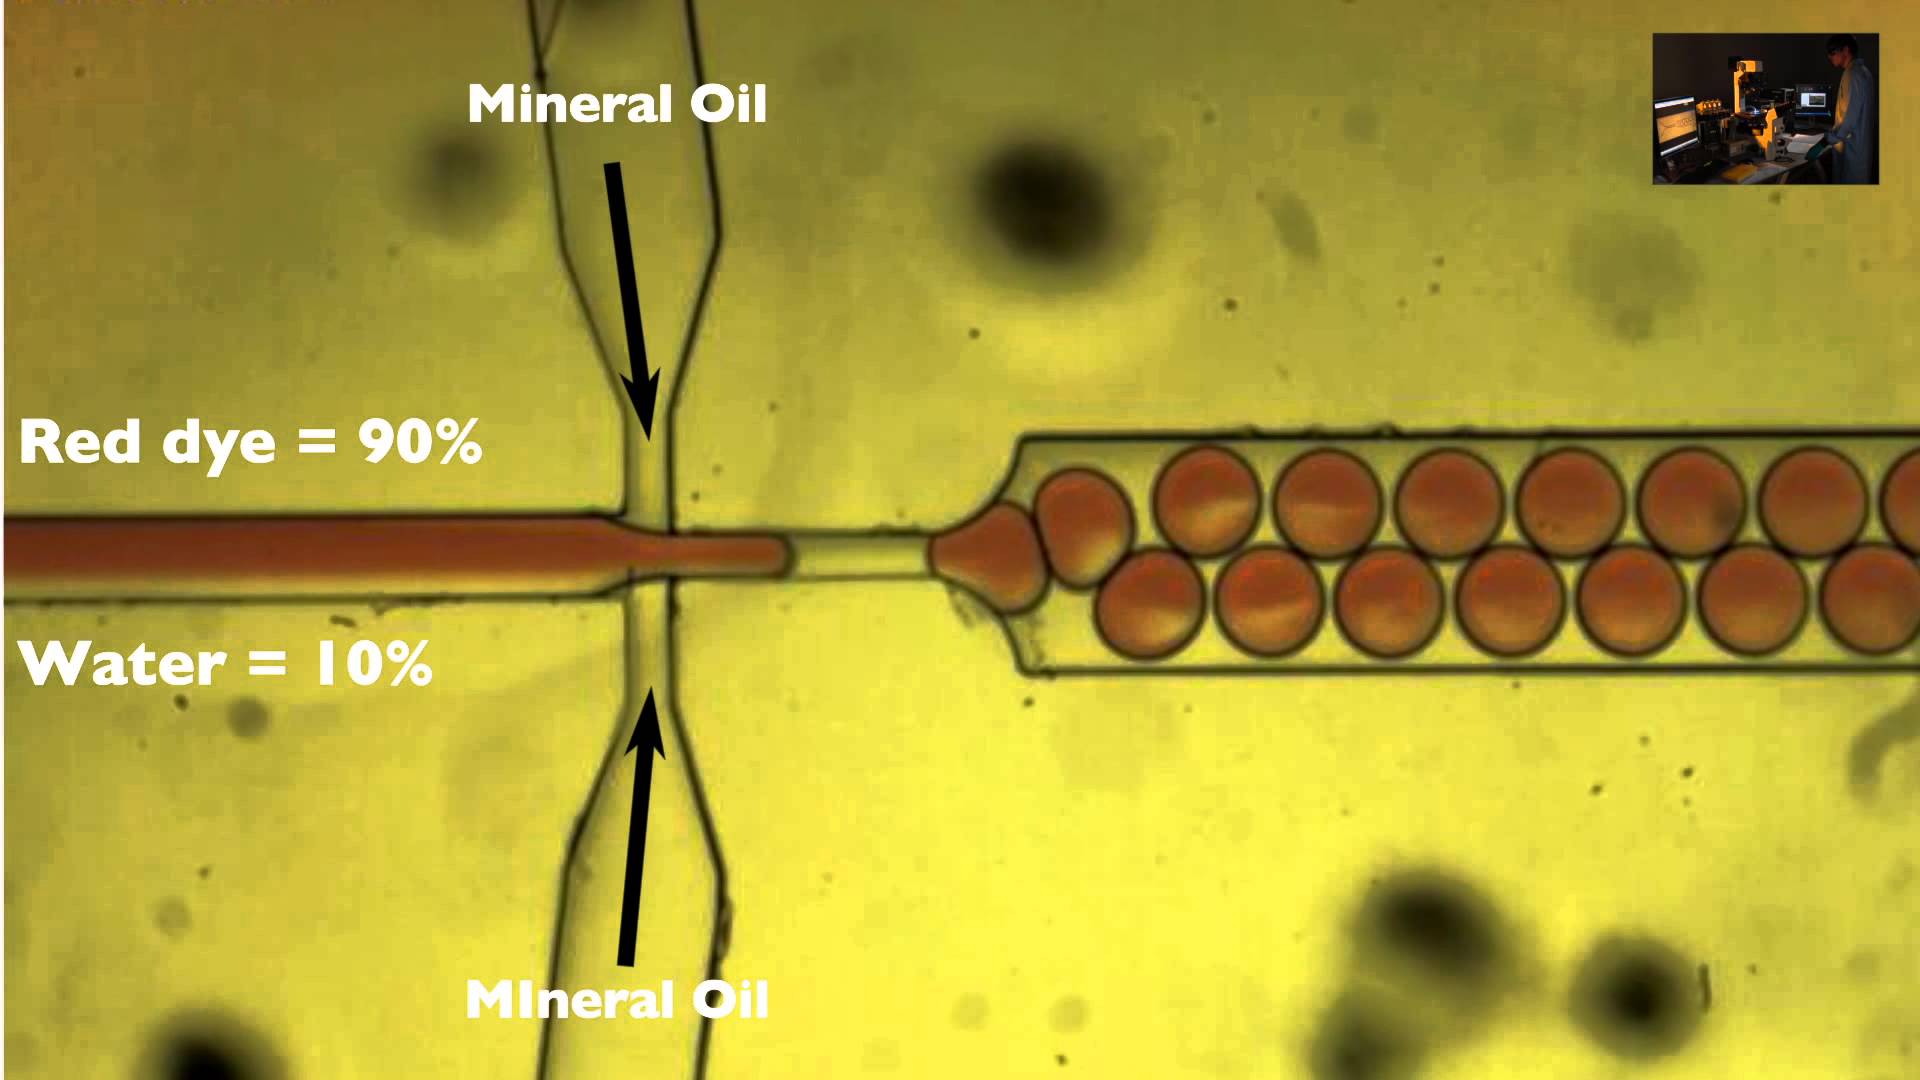 Water in oil emulsion in a microchip - YouTube